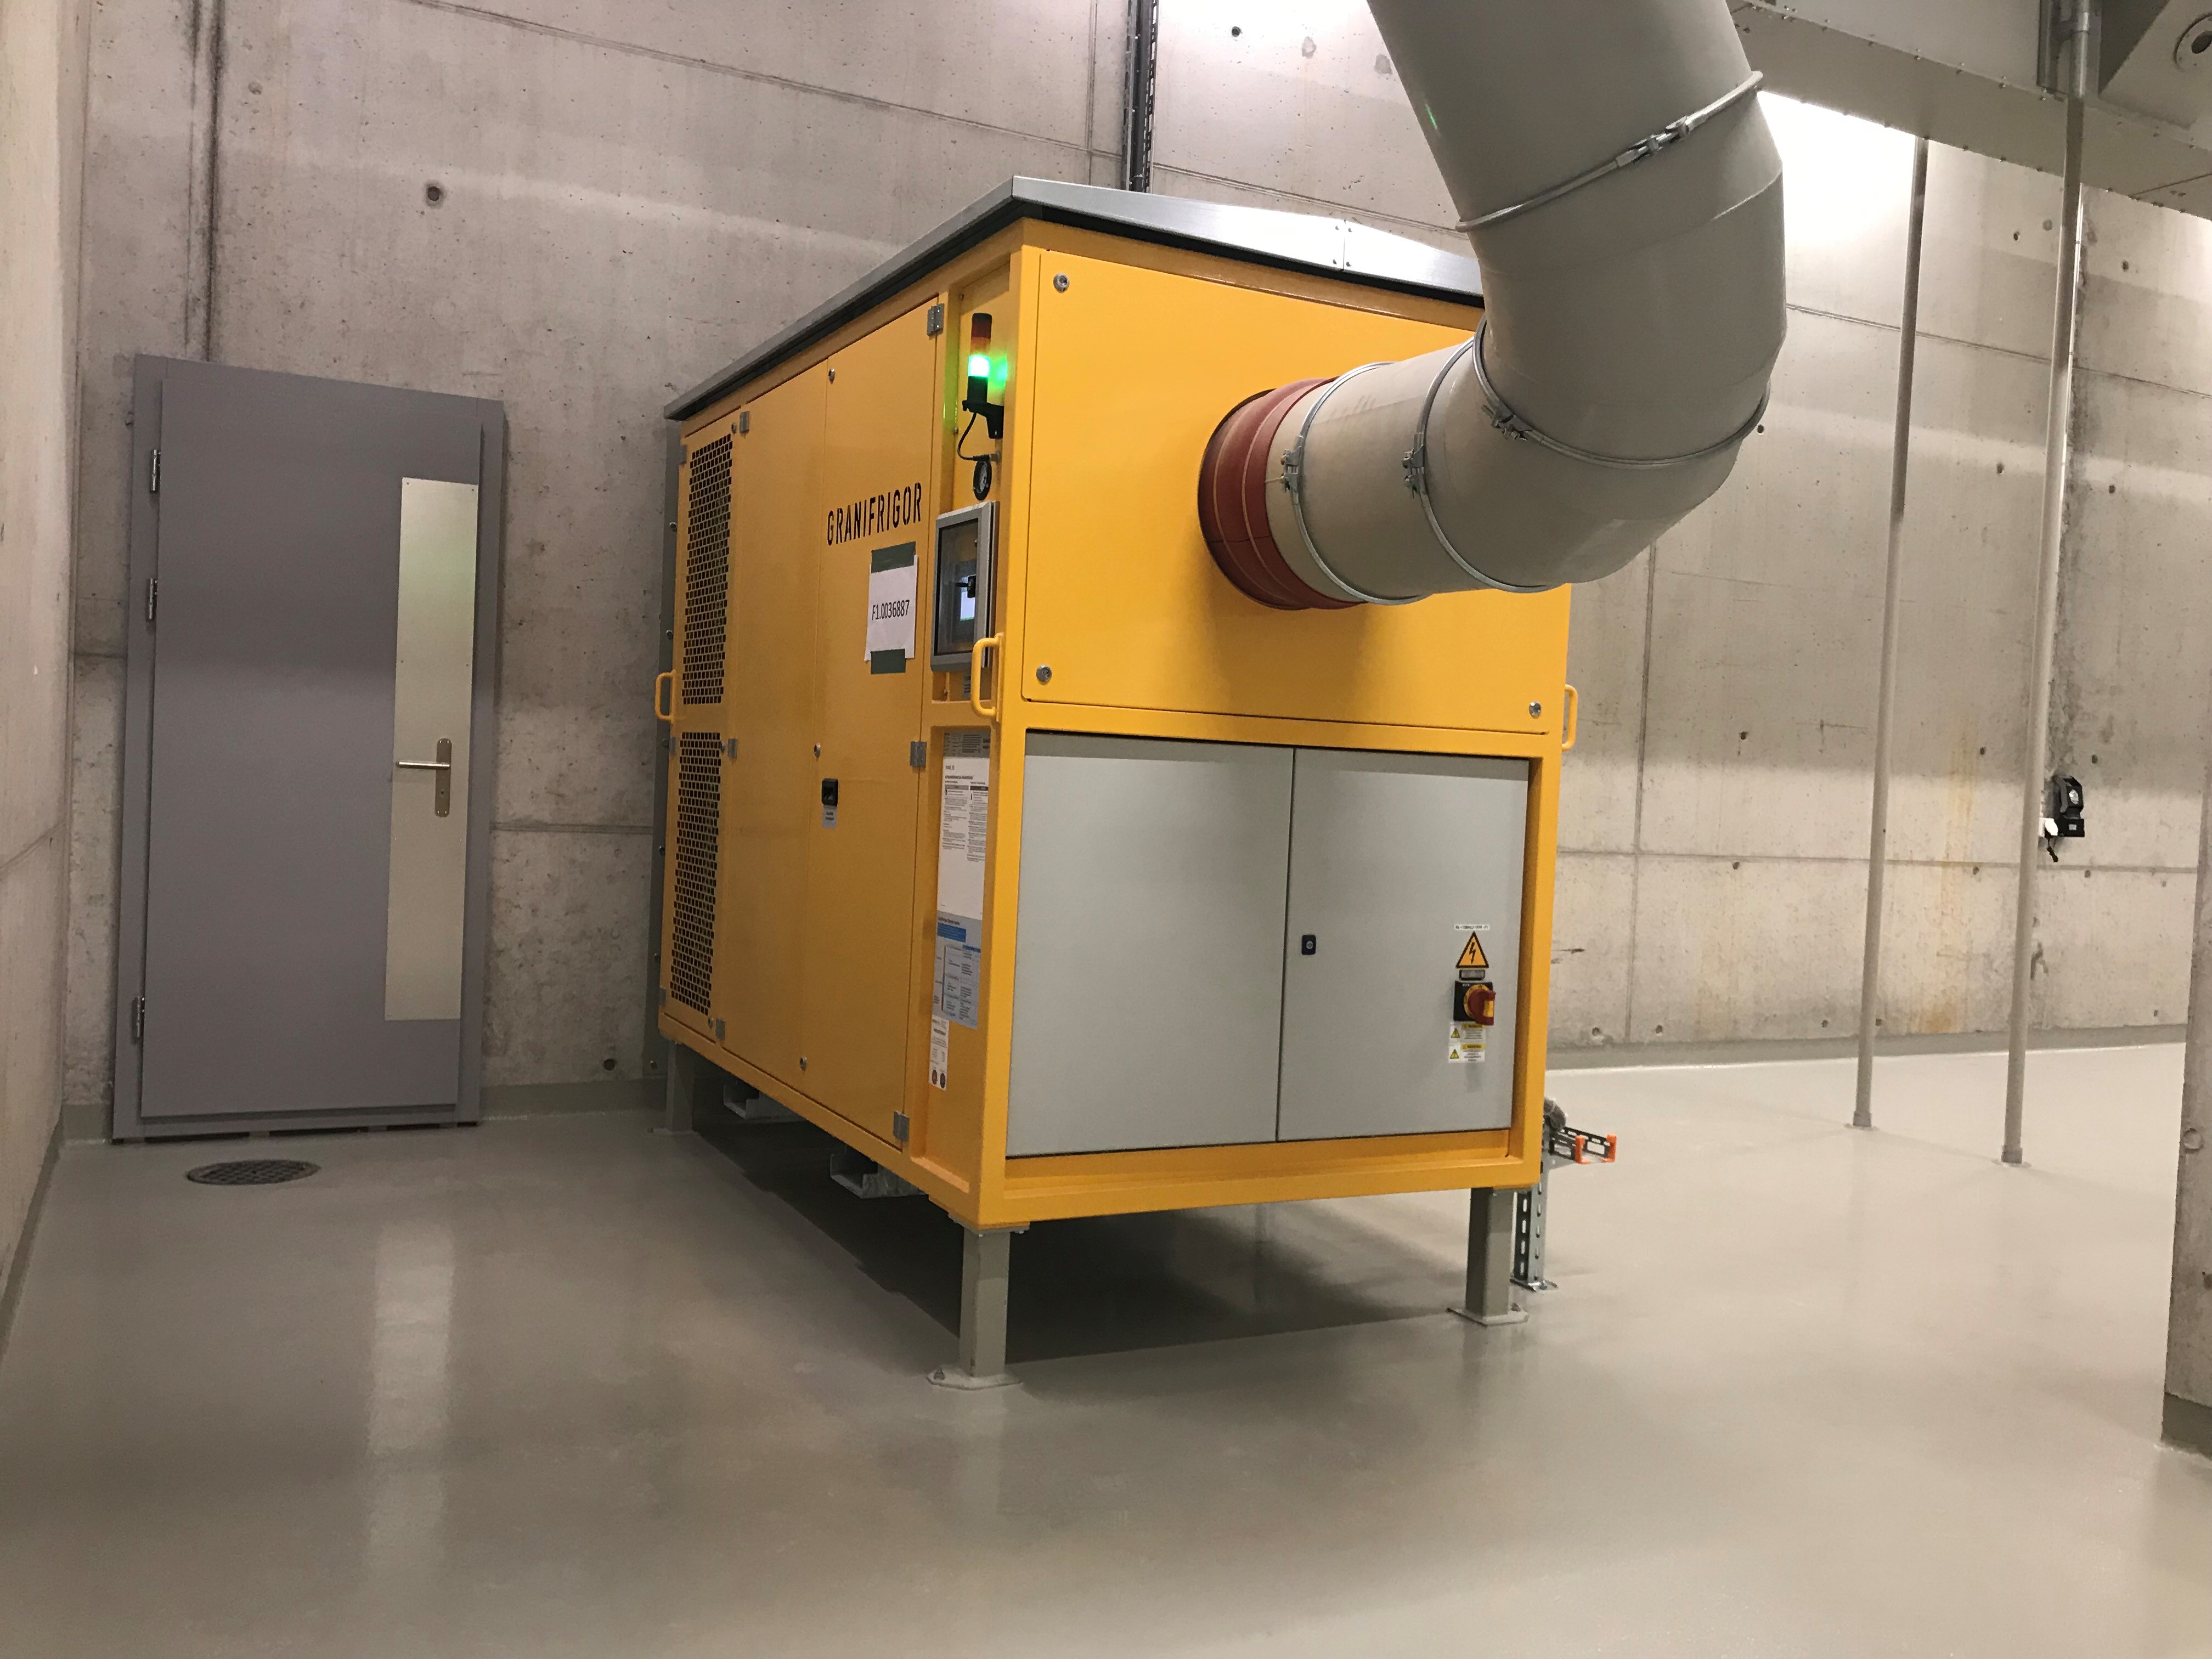 Modern grain cooler being used in Switzerland 